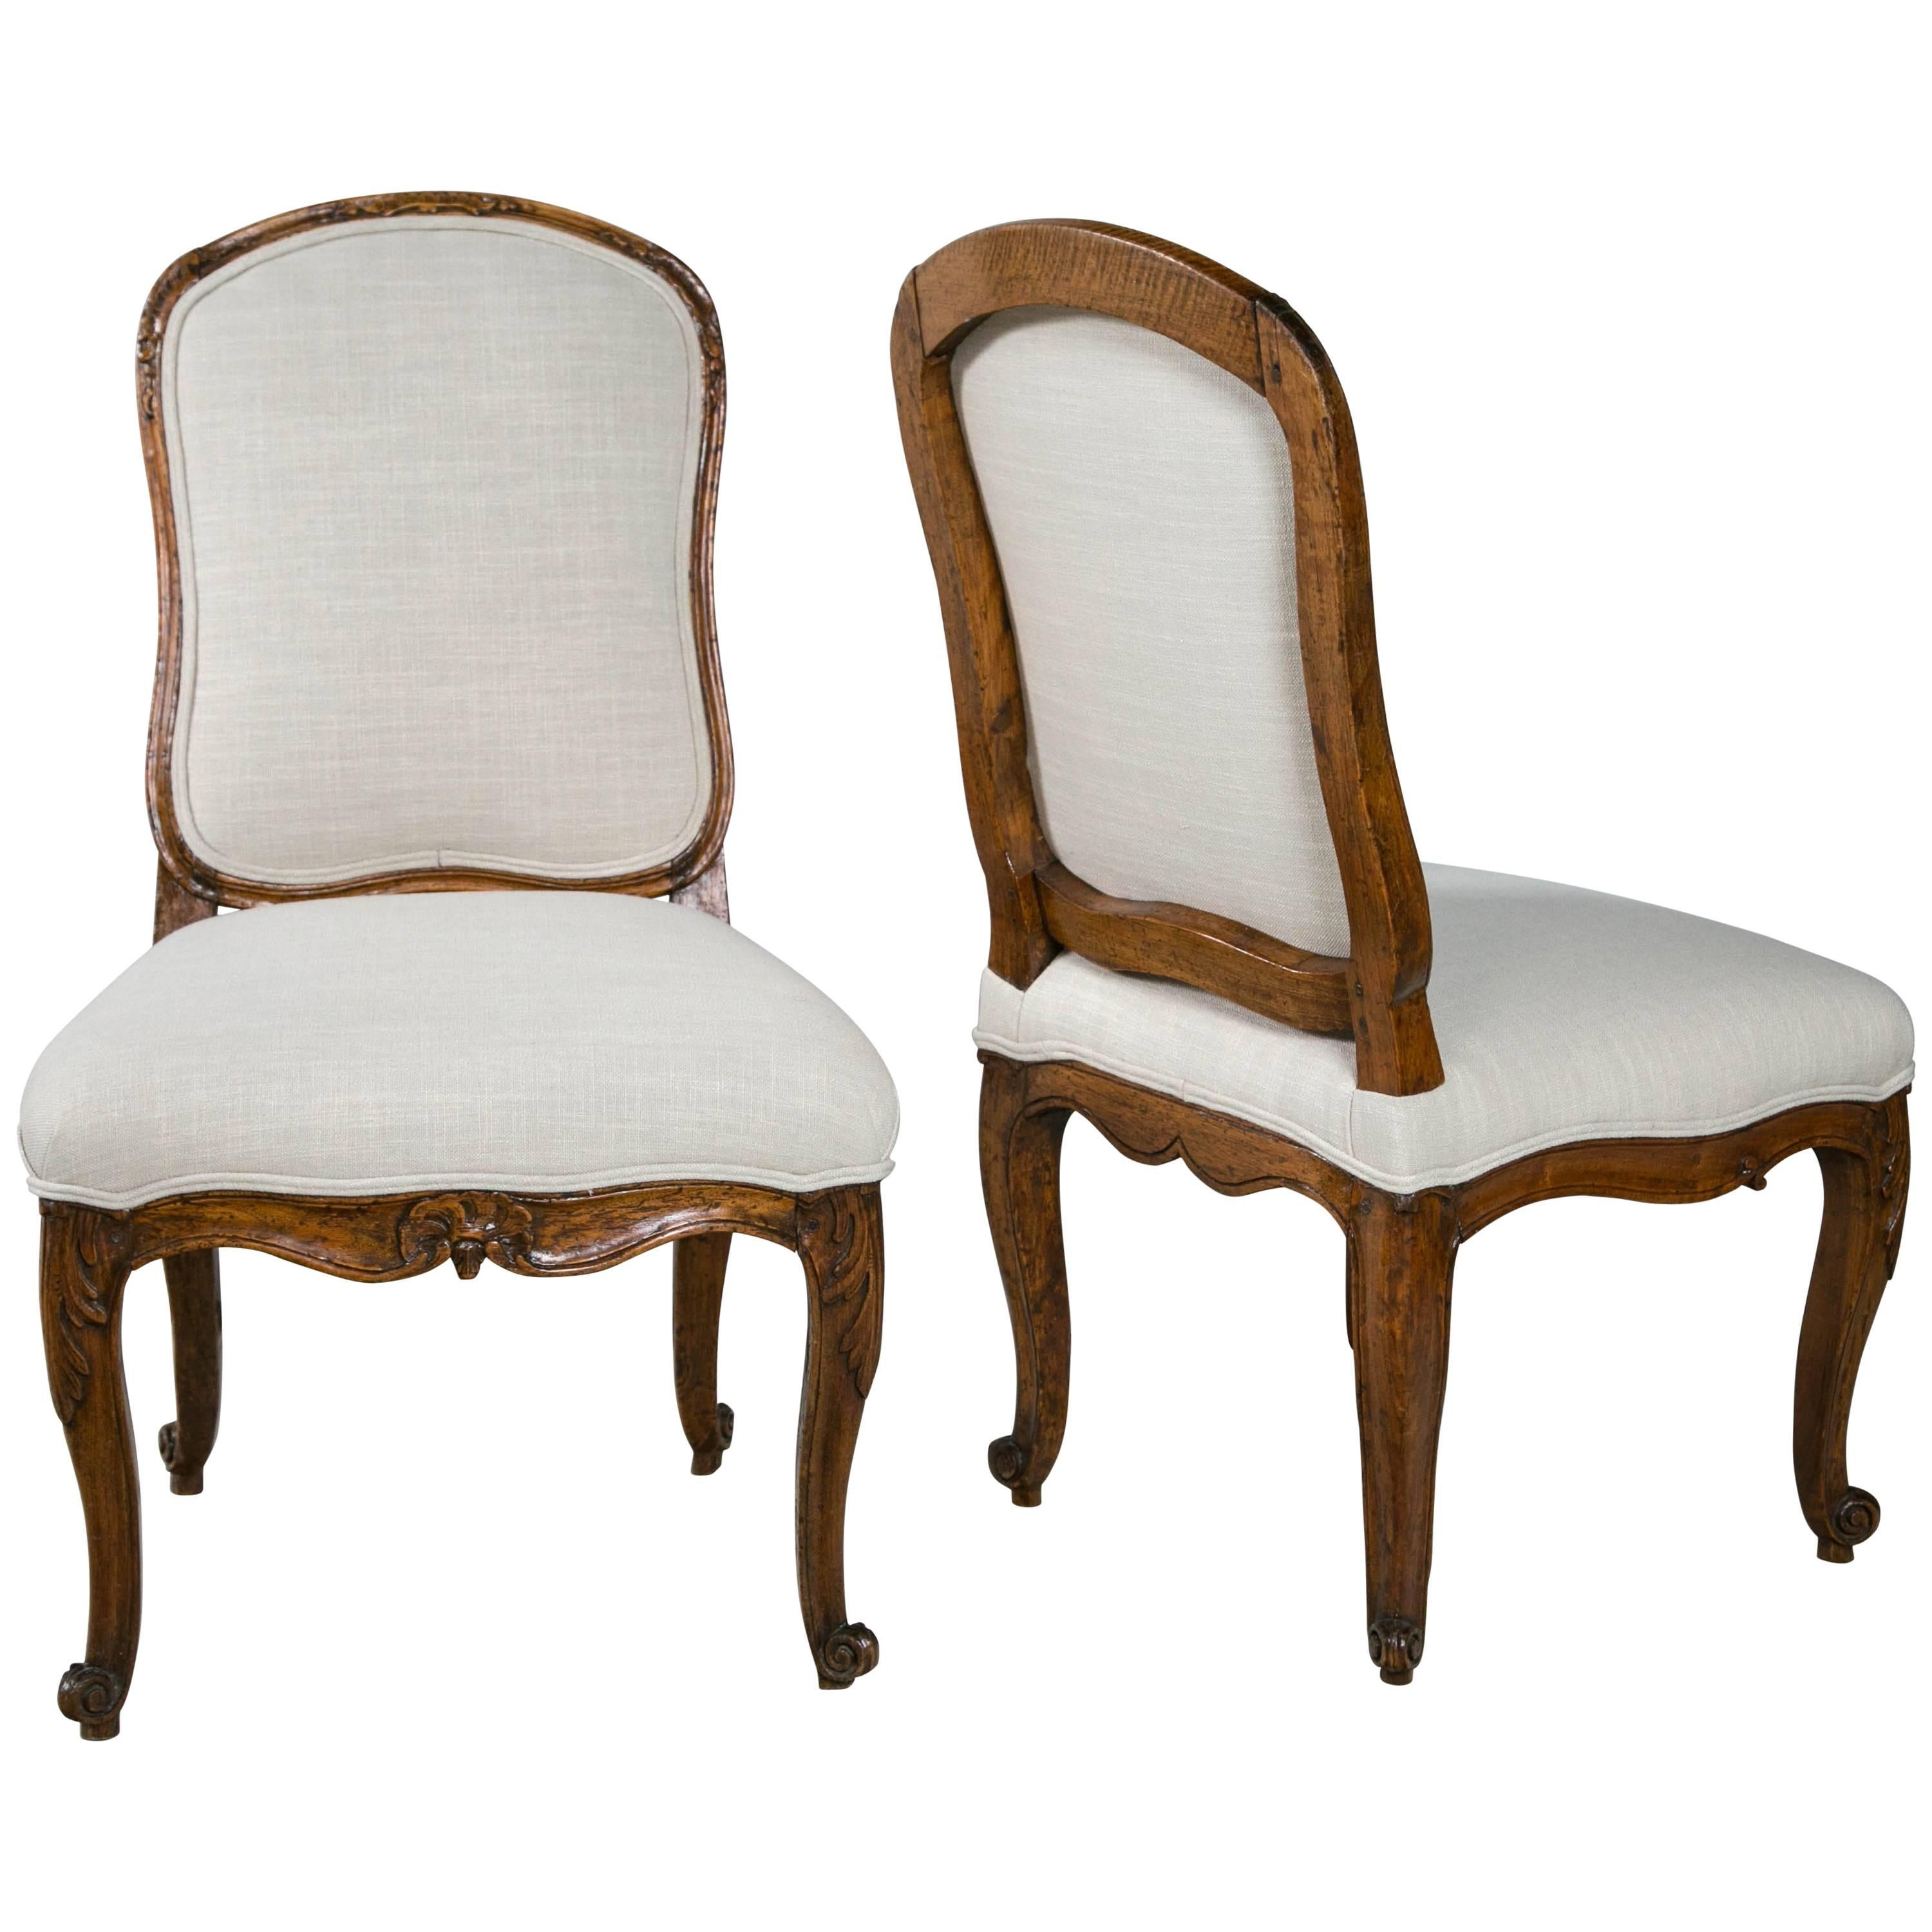 Pair of 18th Century Walnut Chairs